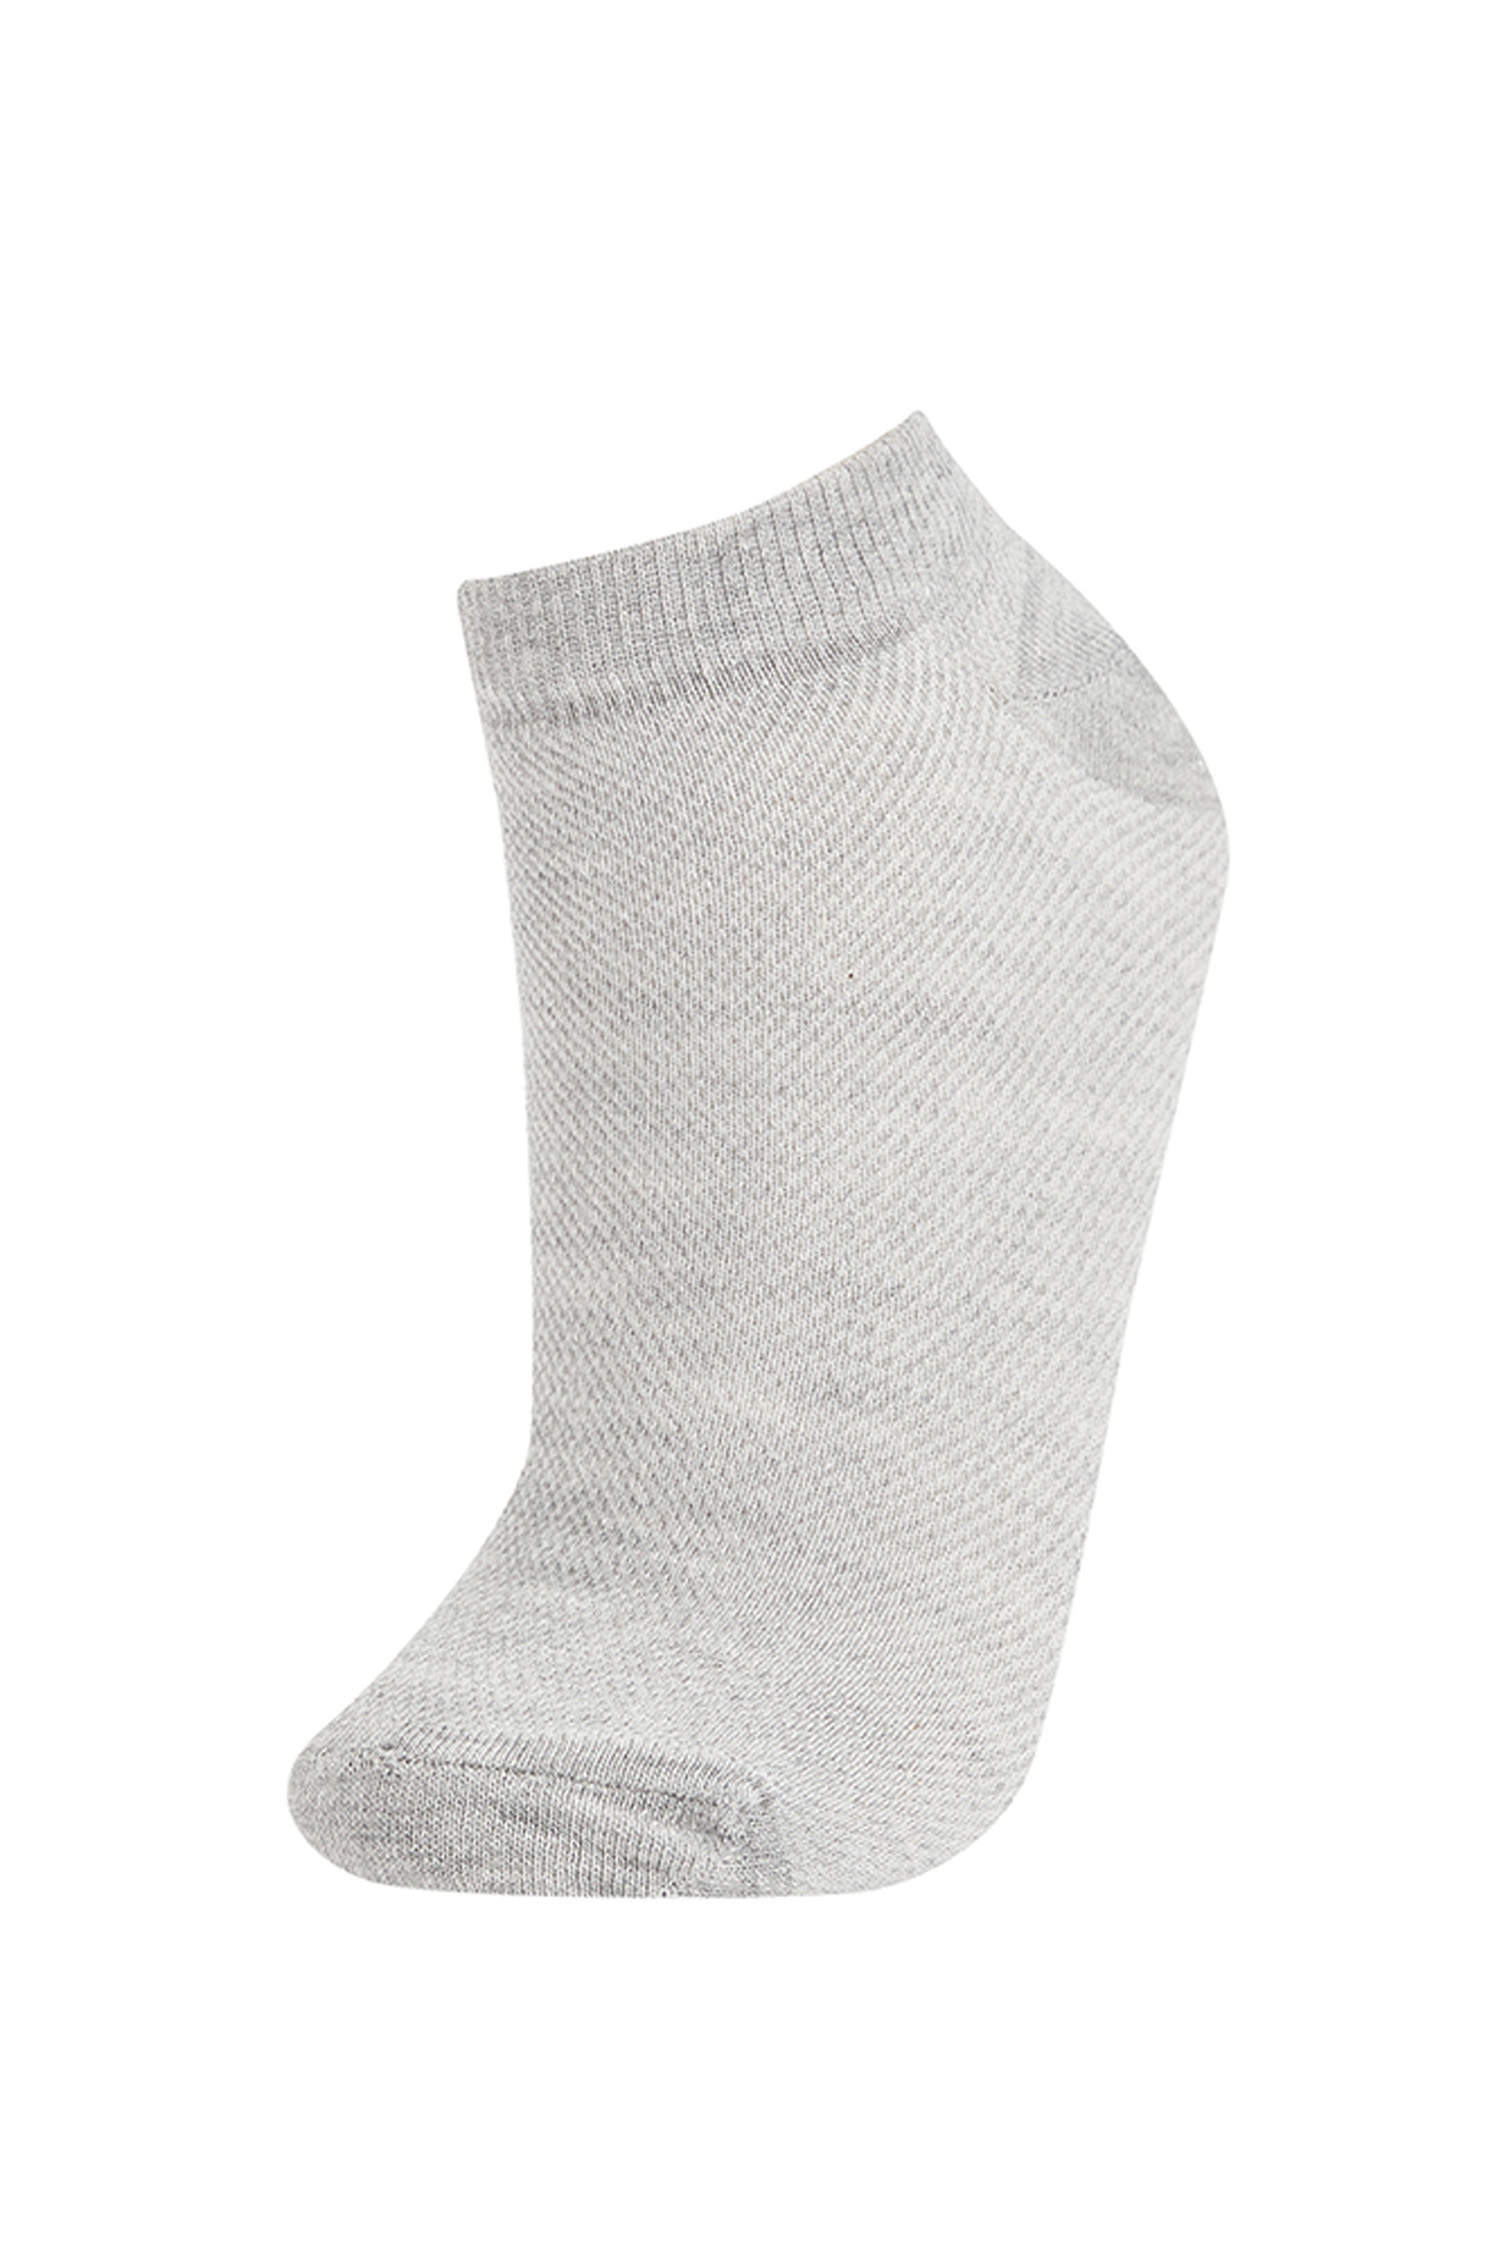 Defacto Kadın Pamuklu 3'lü Patik Çorap. 3